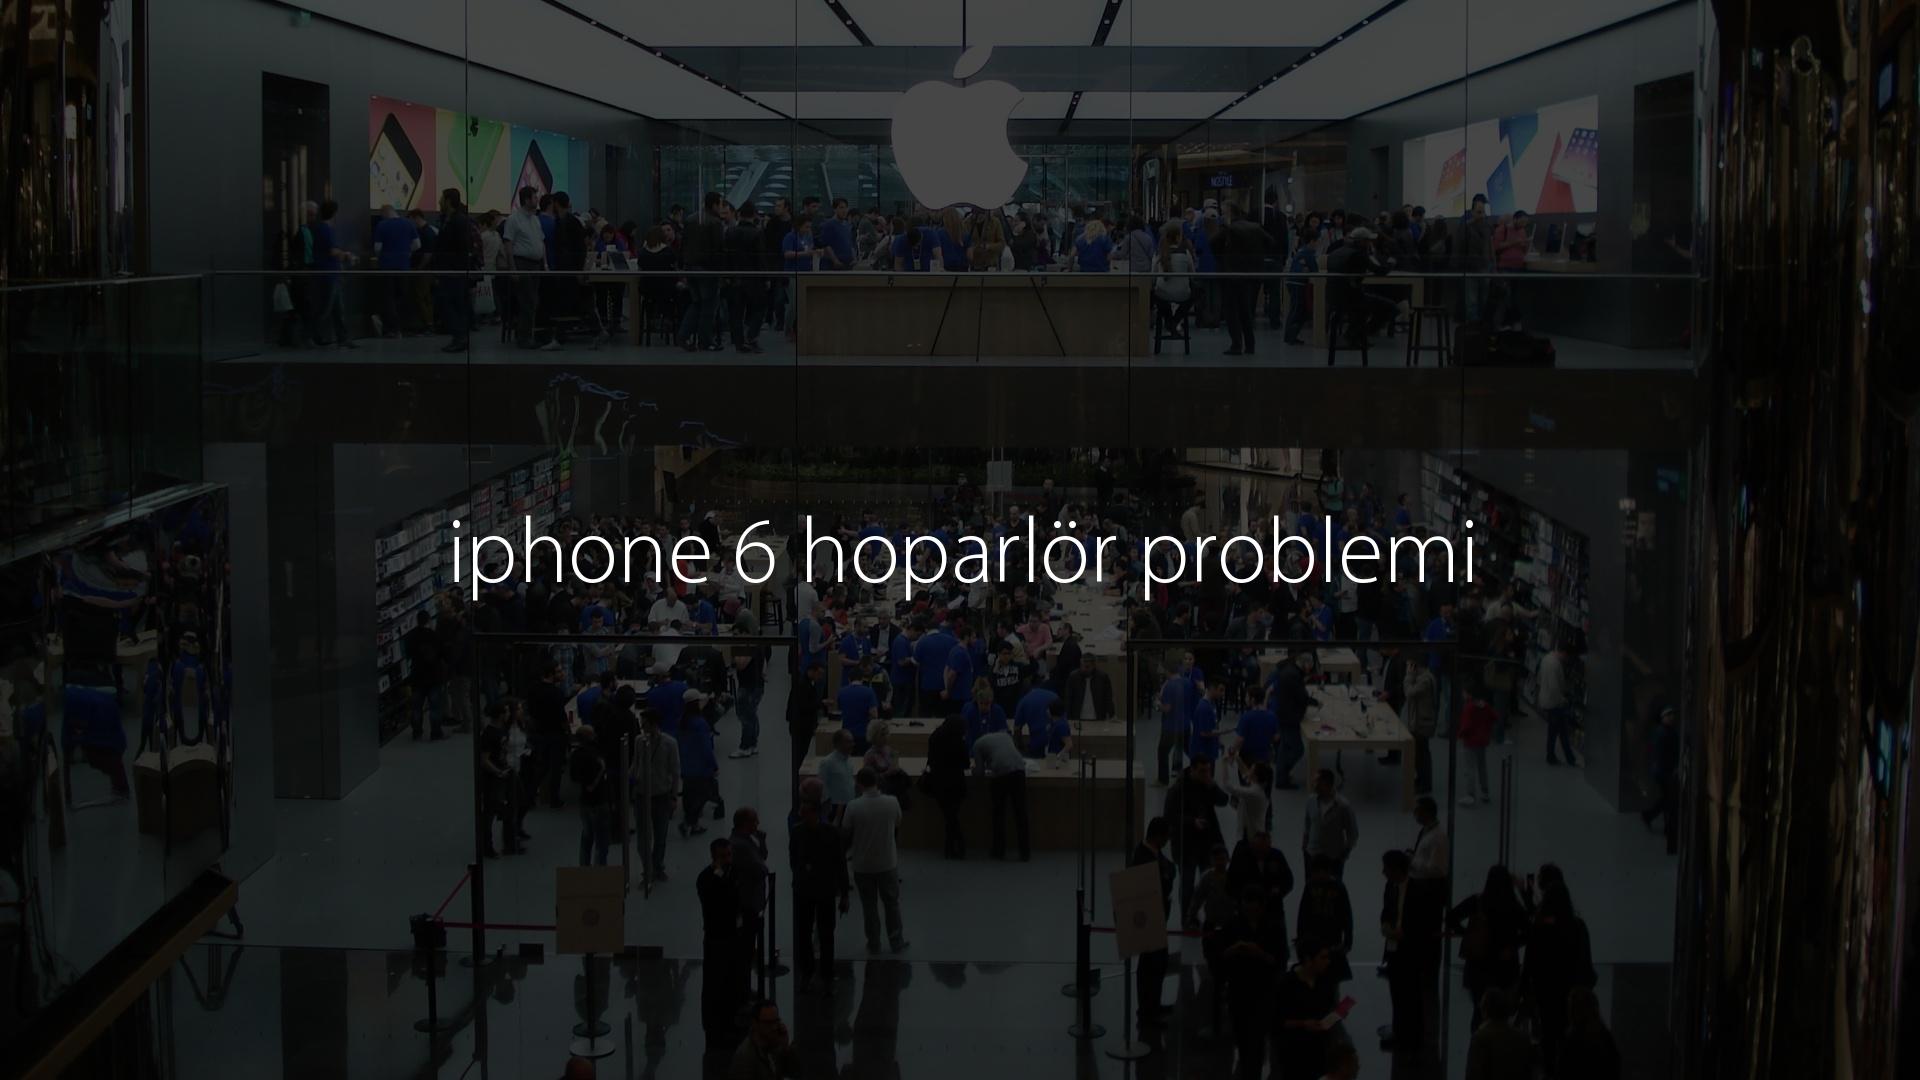 iphone 6 hoparlör problemi